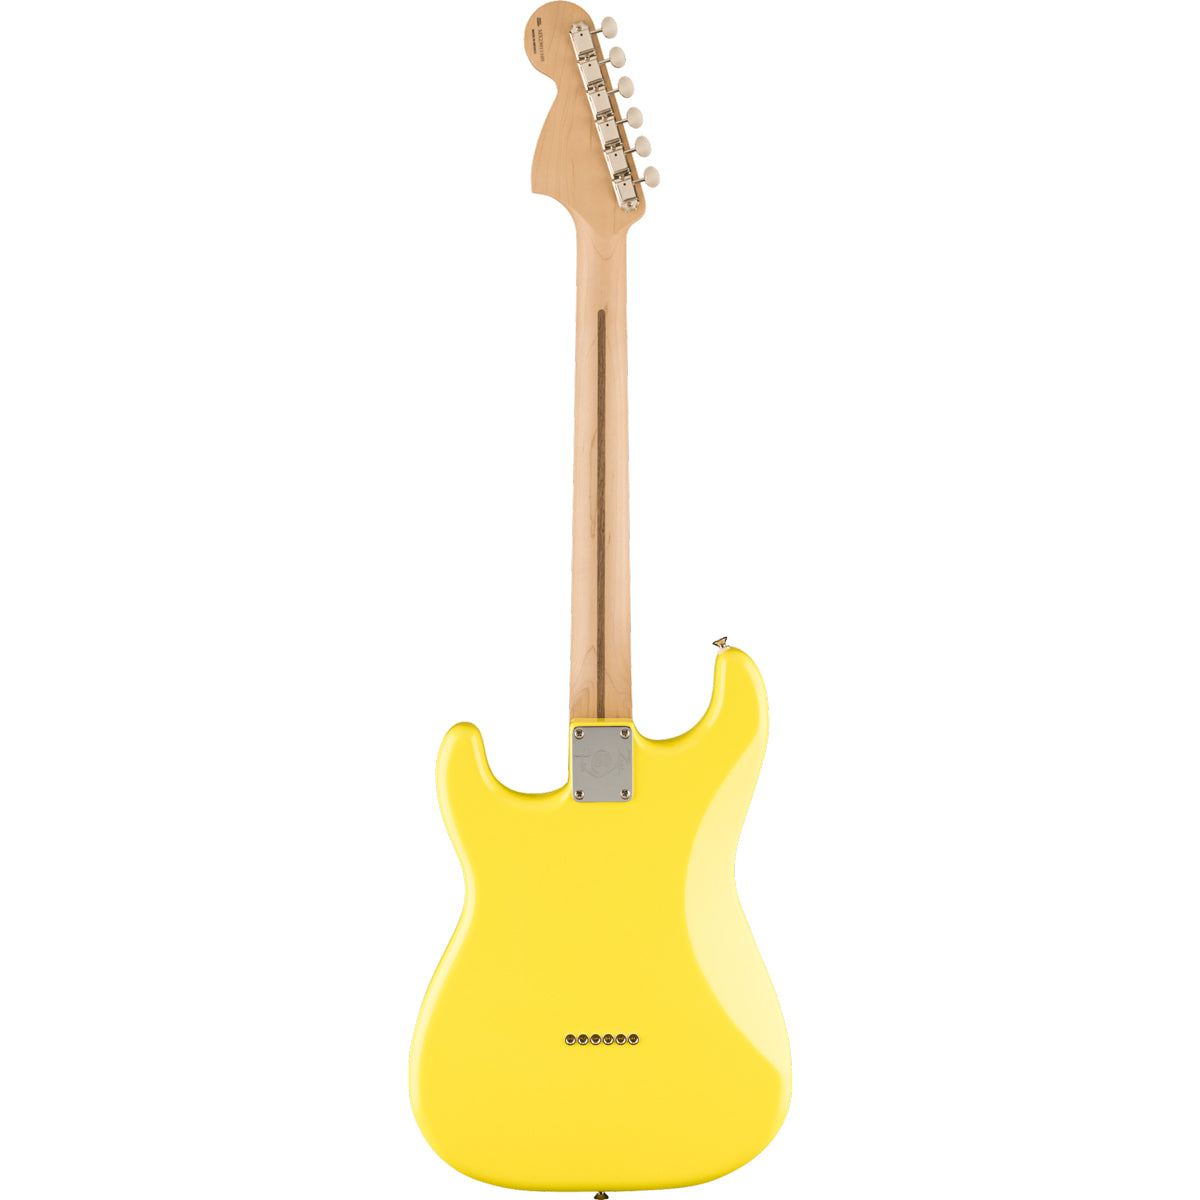 Fender Limited Edition Tom Delonge Stratocaster Rosewood Fingerboard Graffiti Yellow